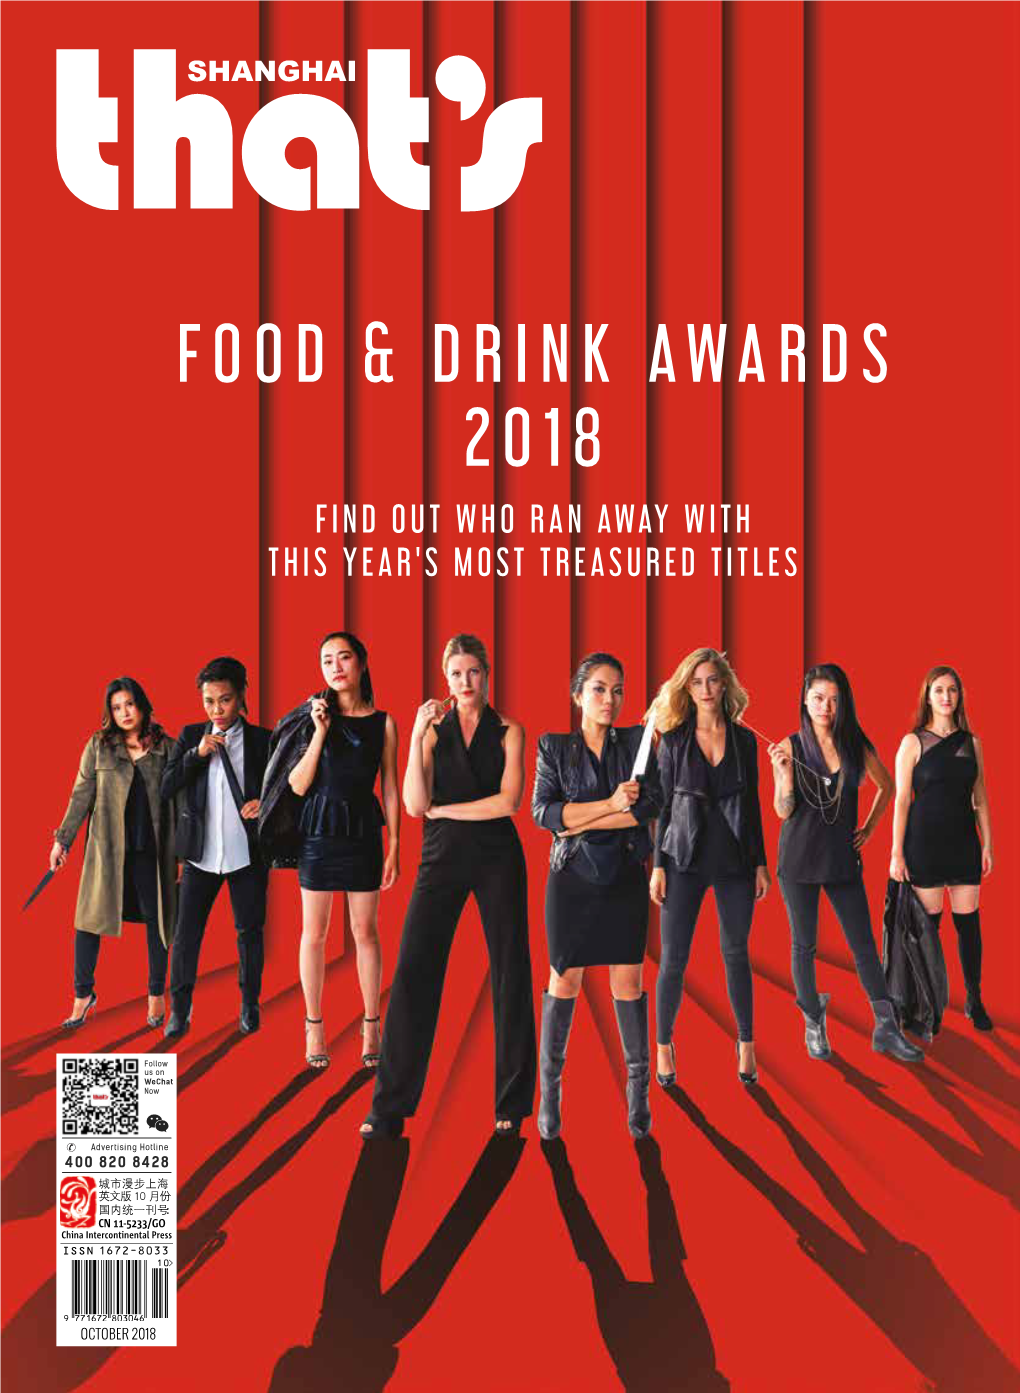 Food & Drink Awards 2018